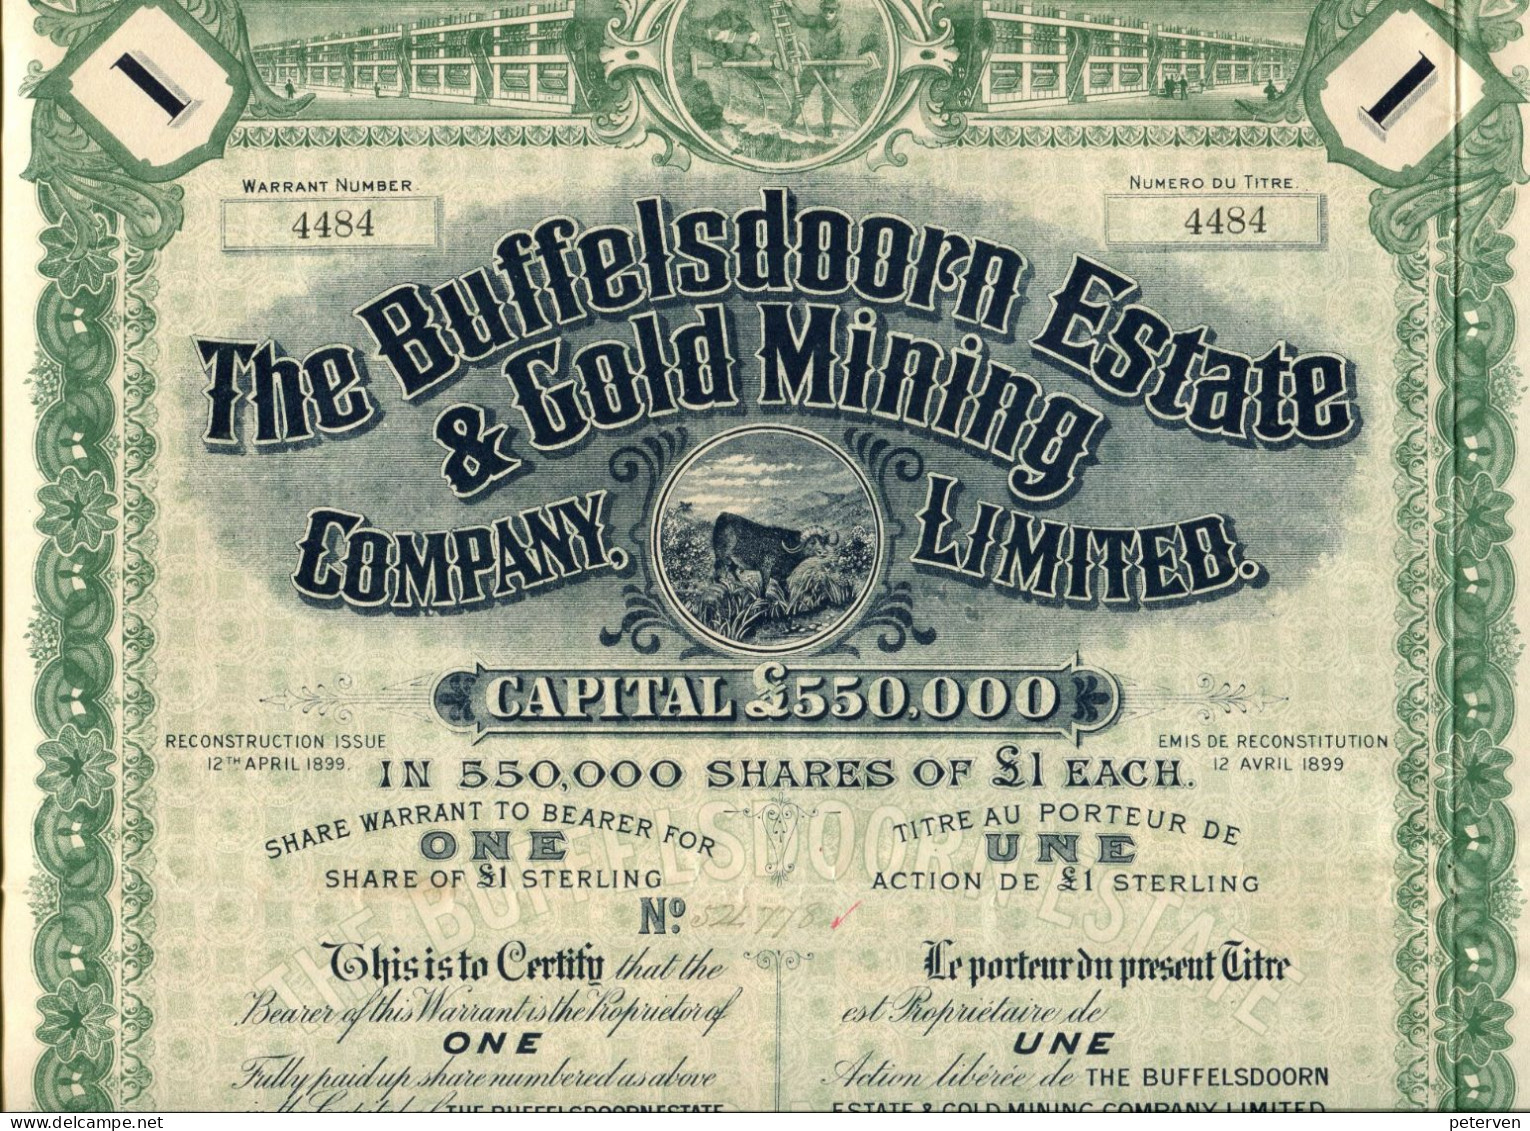 The BUFFELSDOORN ESTATE & GOLD MINING COMPANY, Limited - Mines